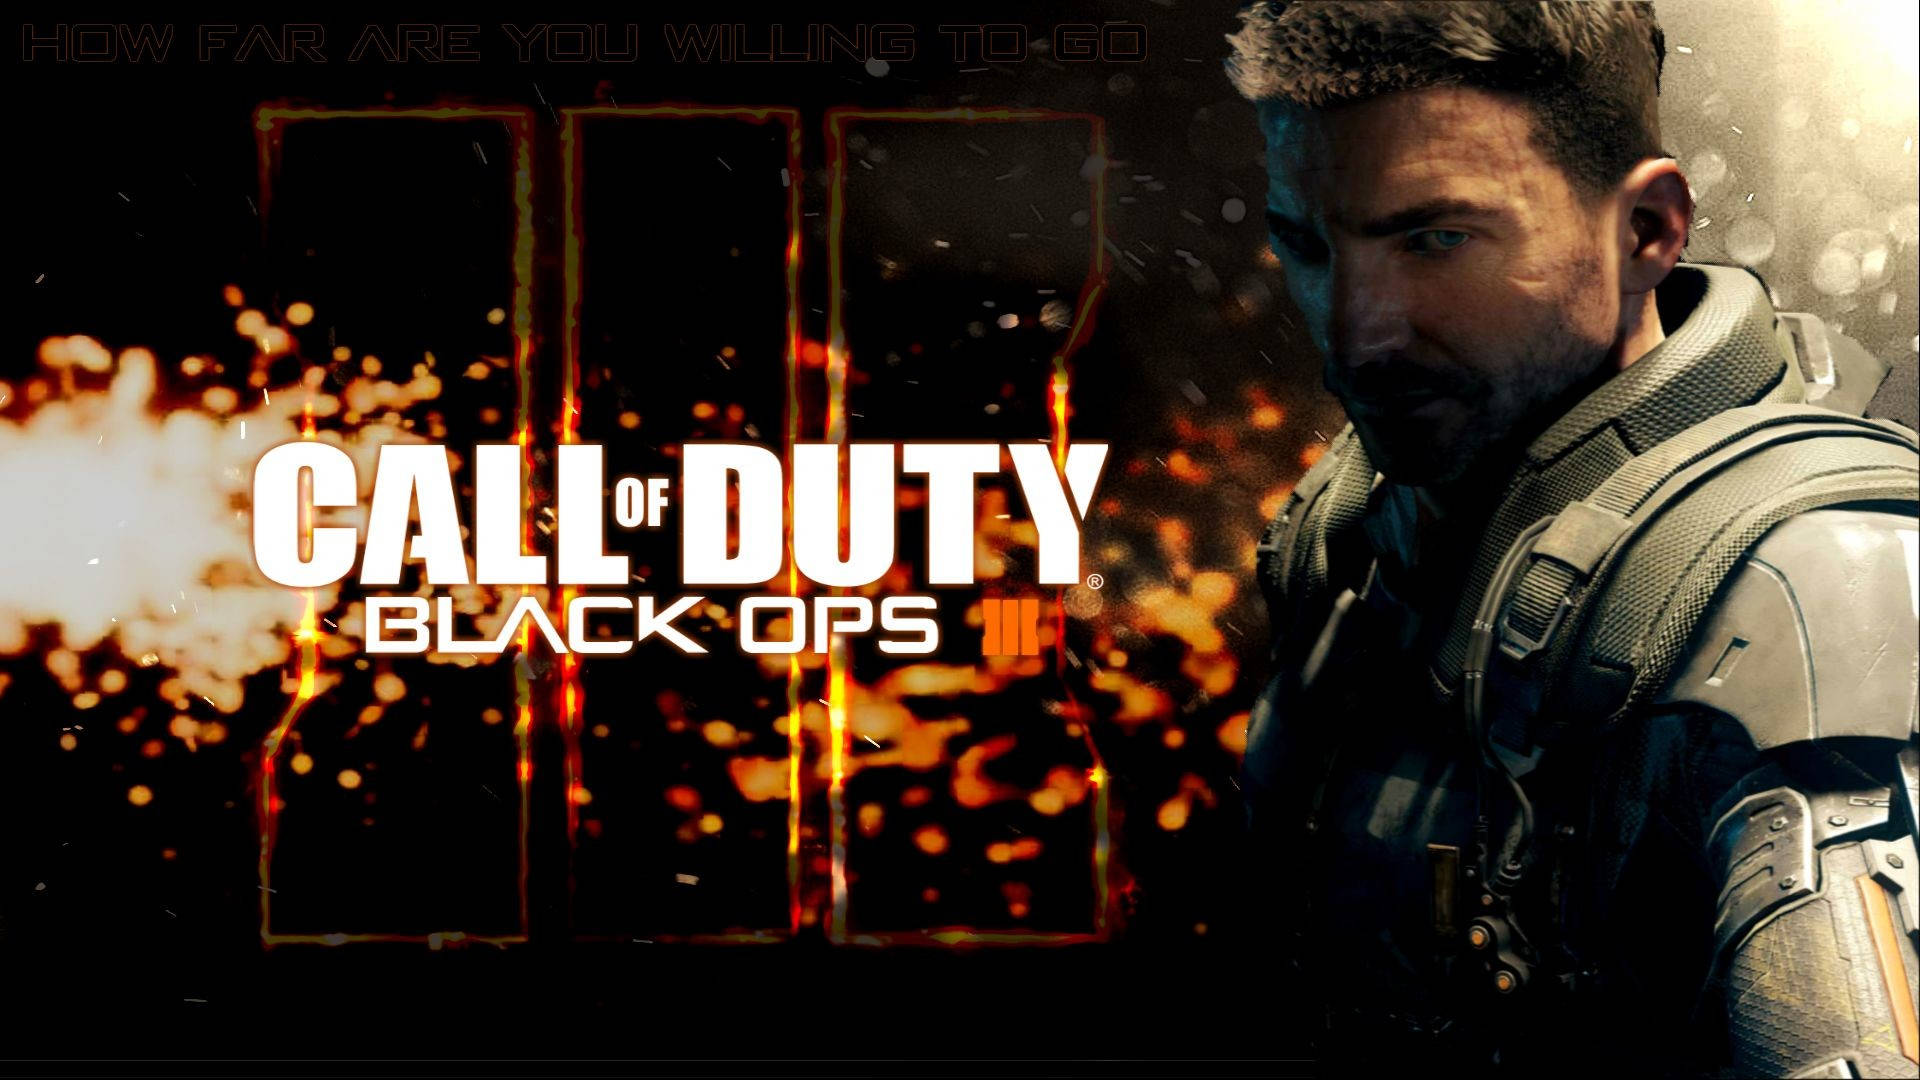 Kald Of Duty Black Ops 3 - Løs kaos Wallpaper